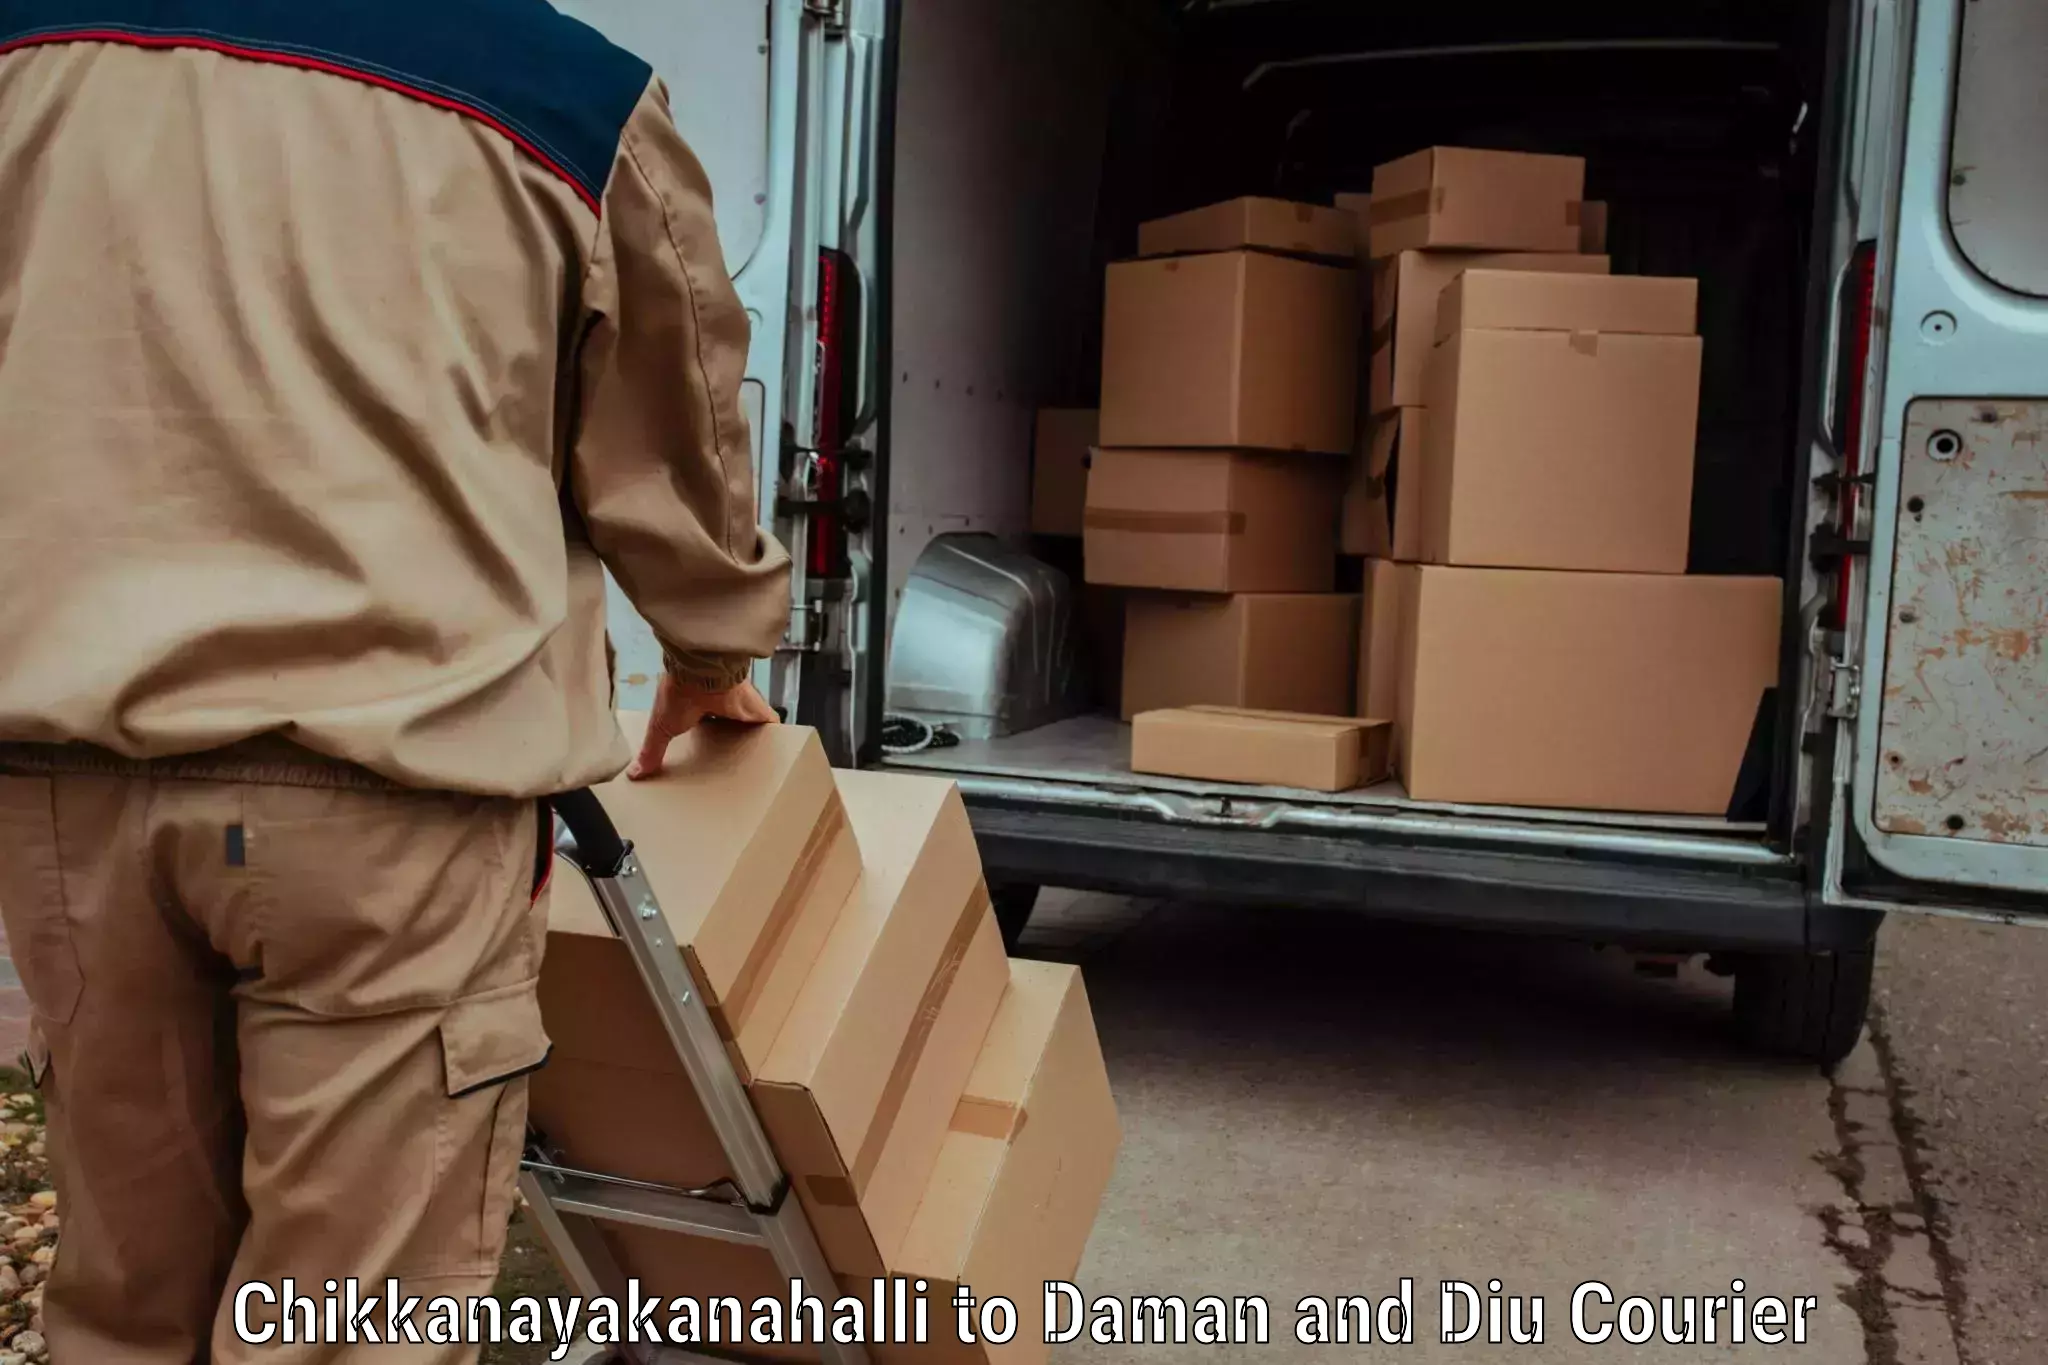 Courier service innovation Chikkanayakanahalli to Diu